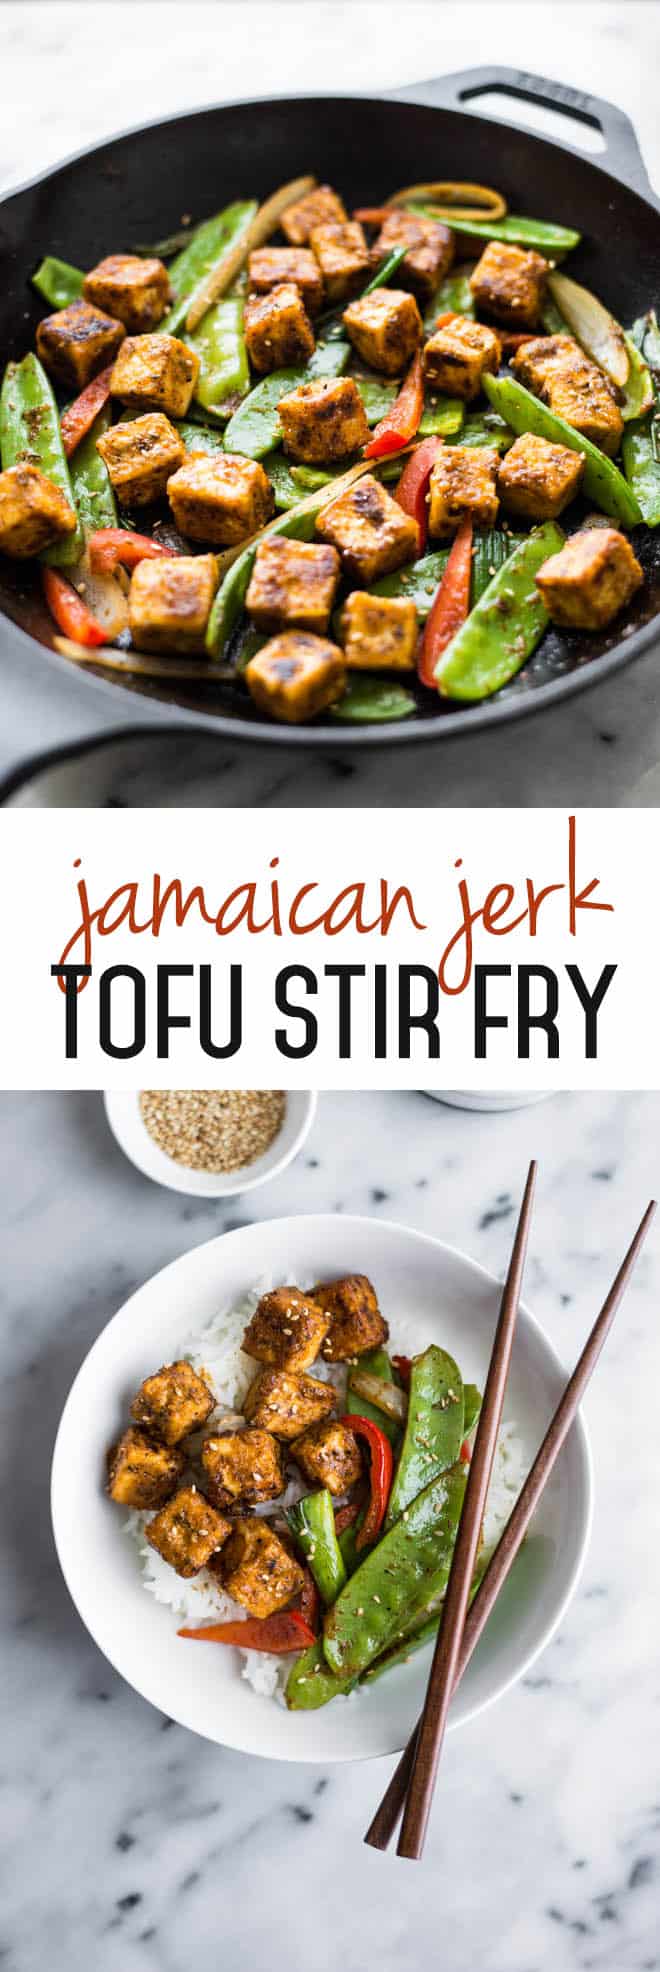 Jamaican Jerk Tofu Stir Fry - easy vegan meal that is full of spice! by Lisa Lin of clube.futebolmilionario.com